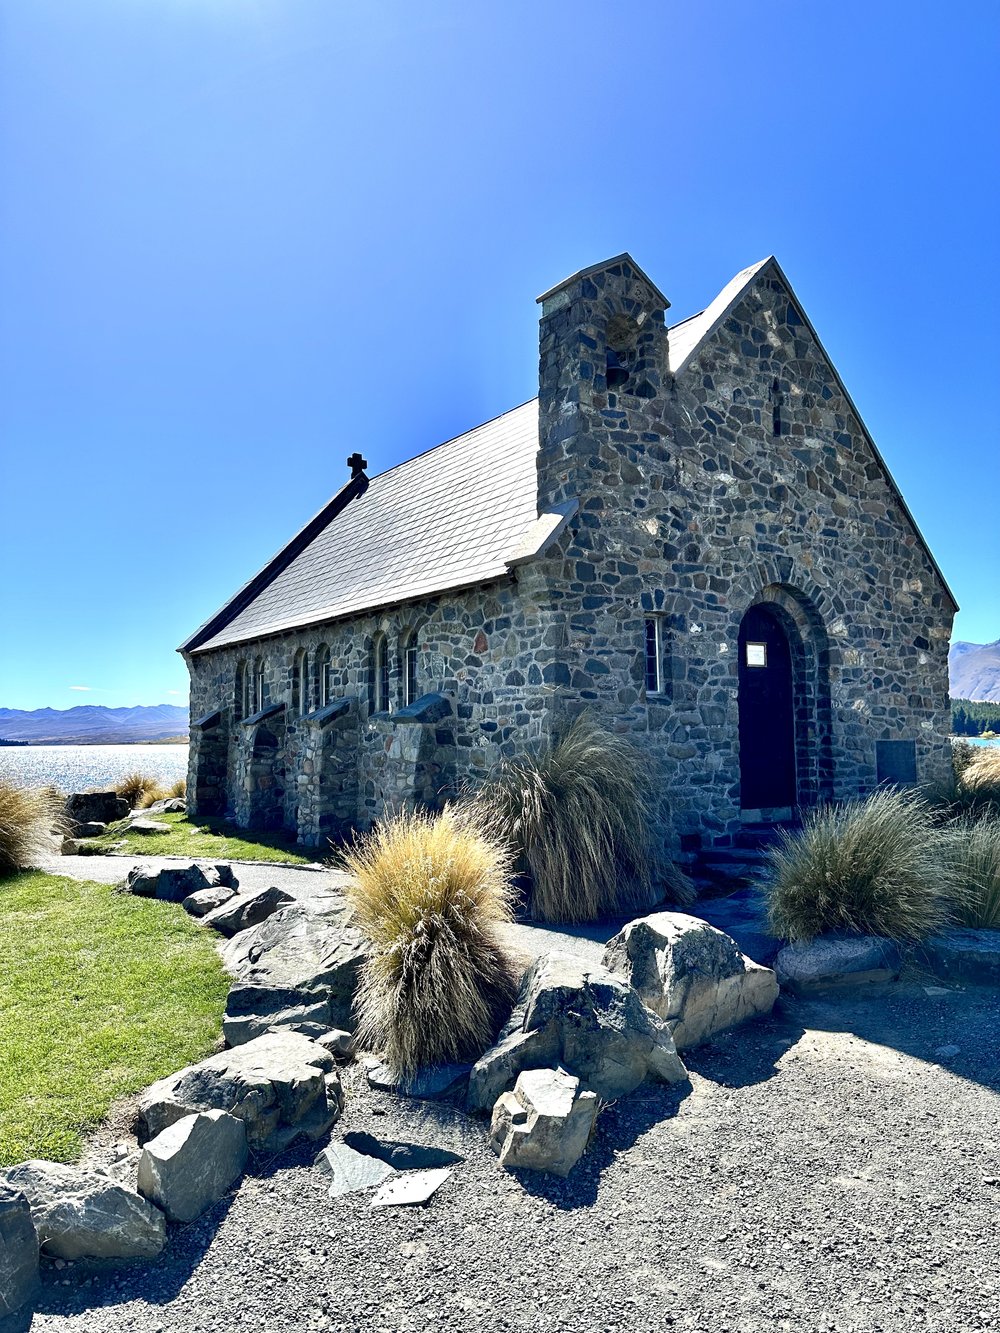 The beautiful lakeside church